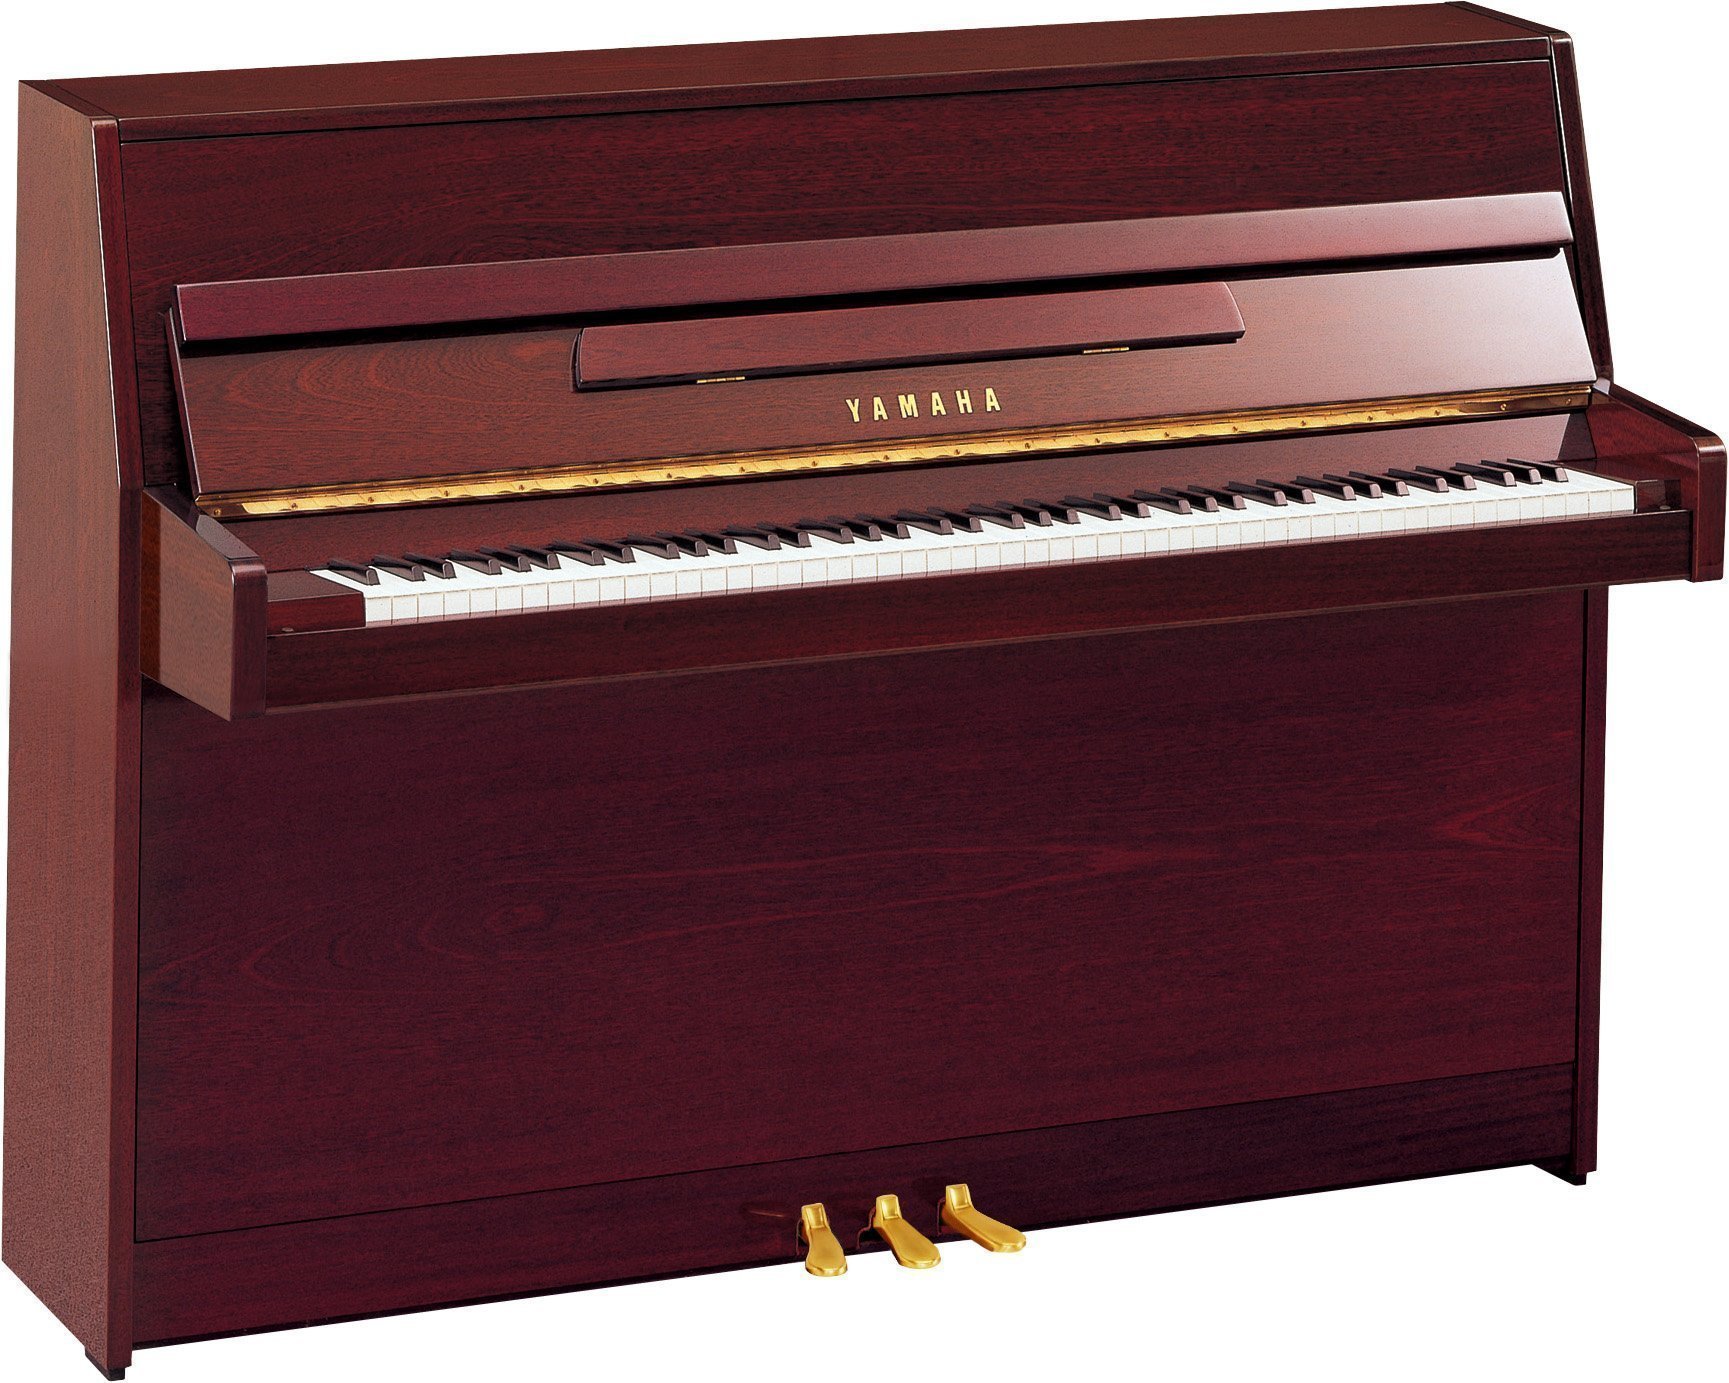 Piano Yamaha B1 PM Polished Mahogany Piano